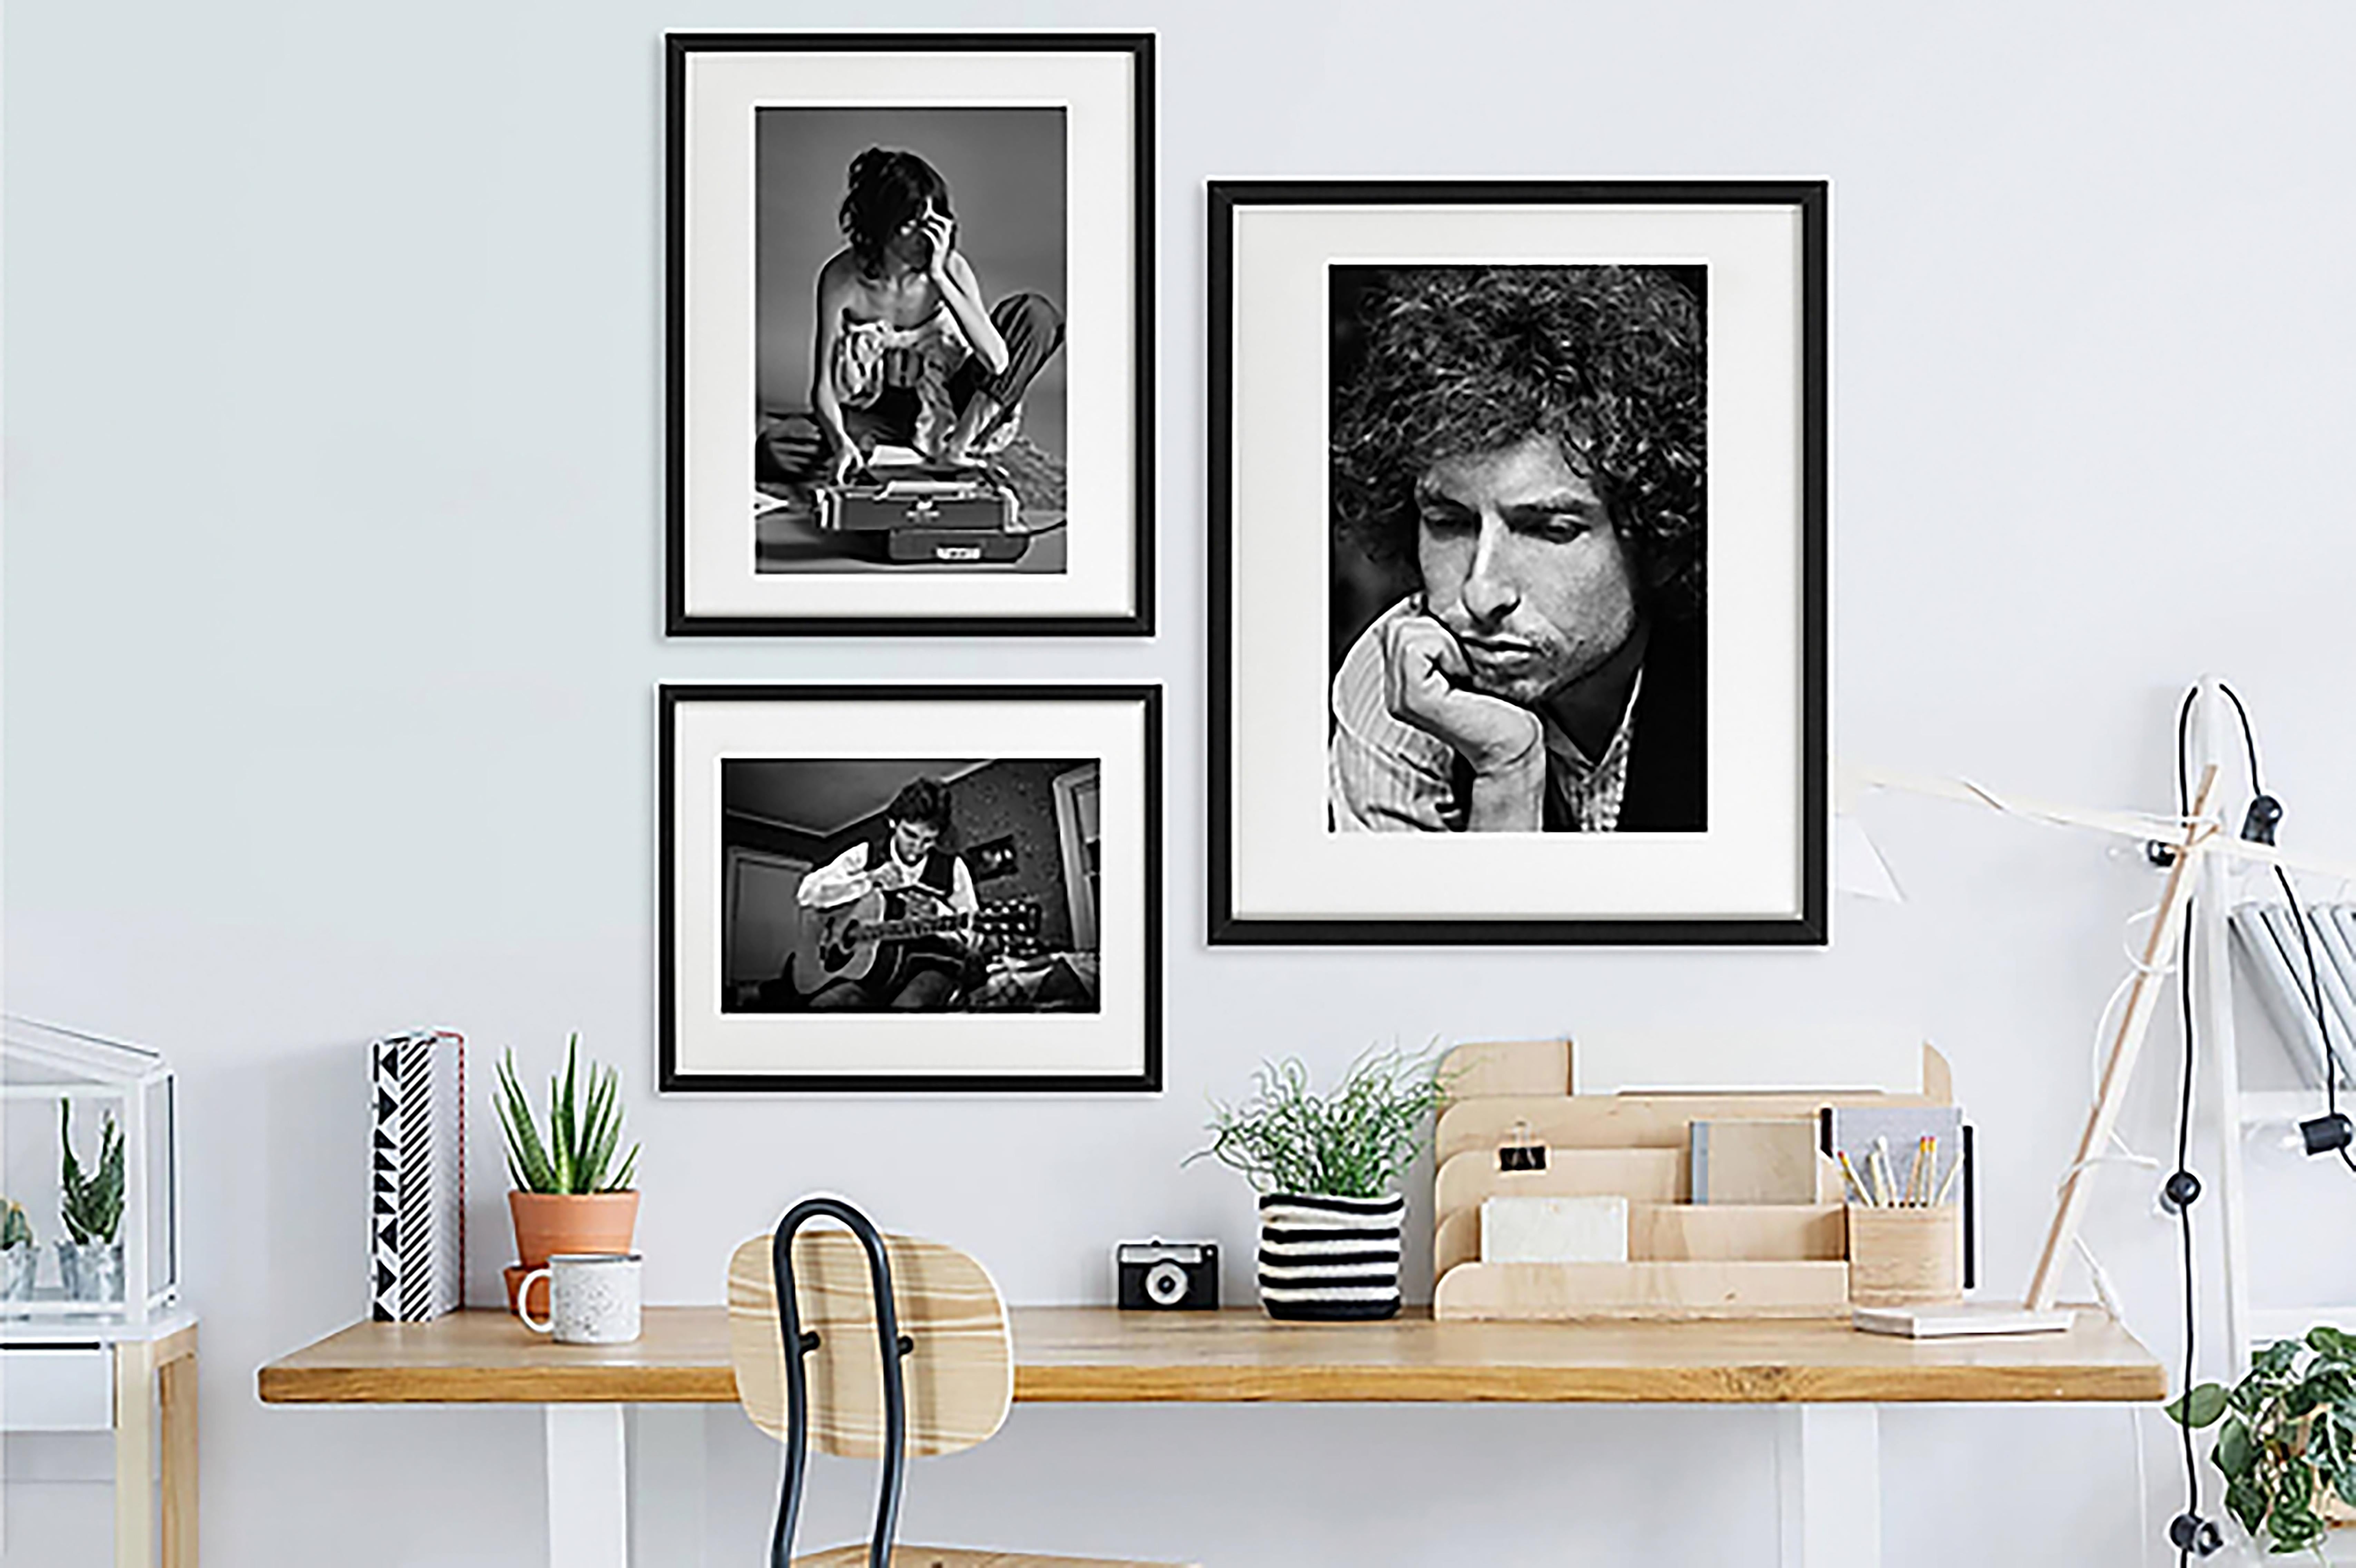 Bob Dylan 1983 - Photograph by Lynn Goldsmith